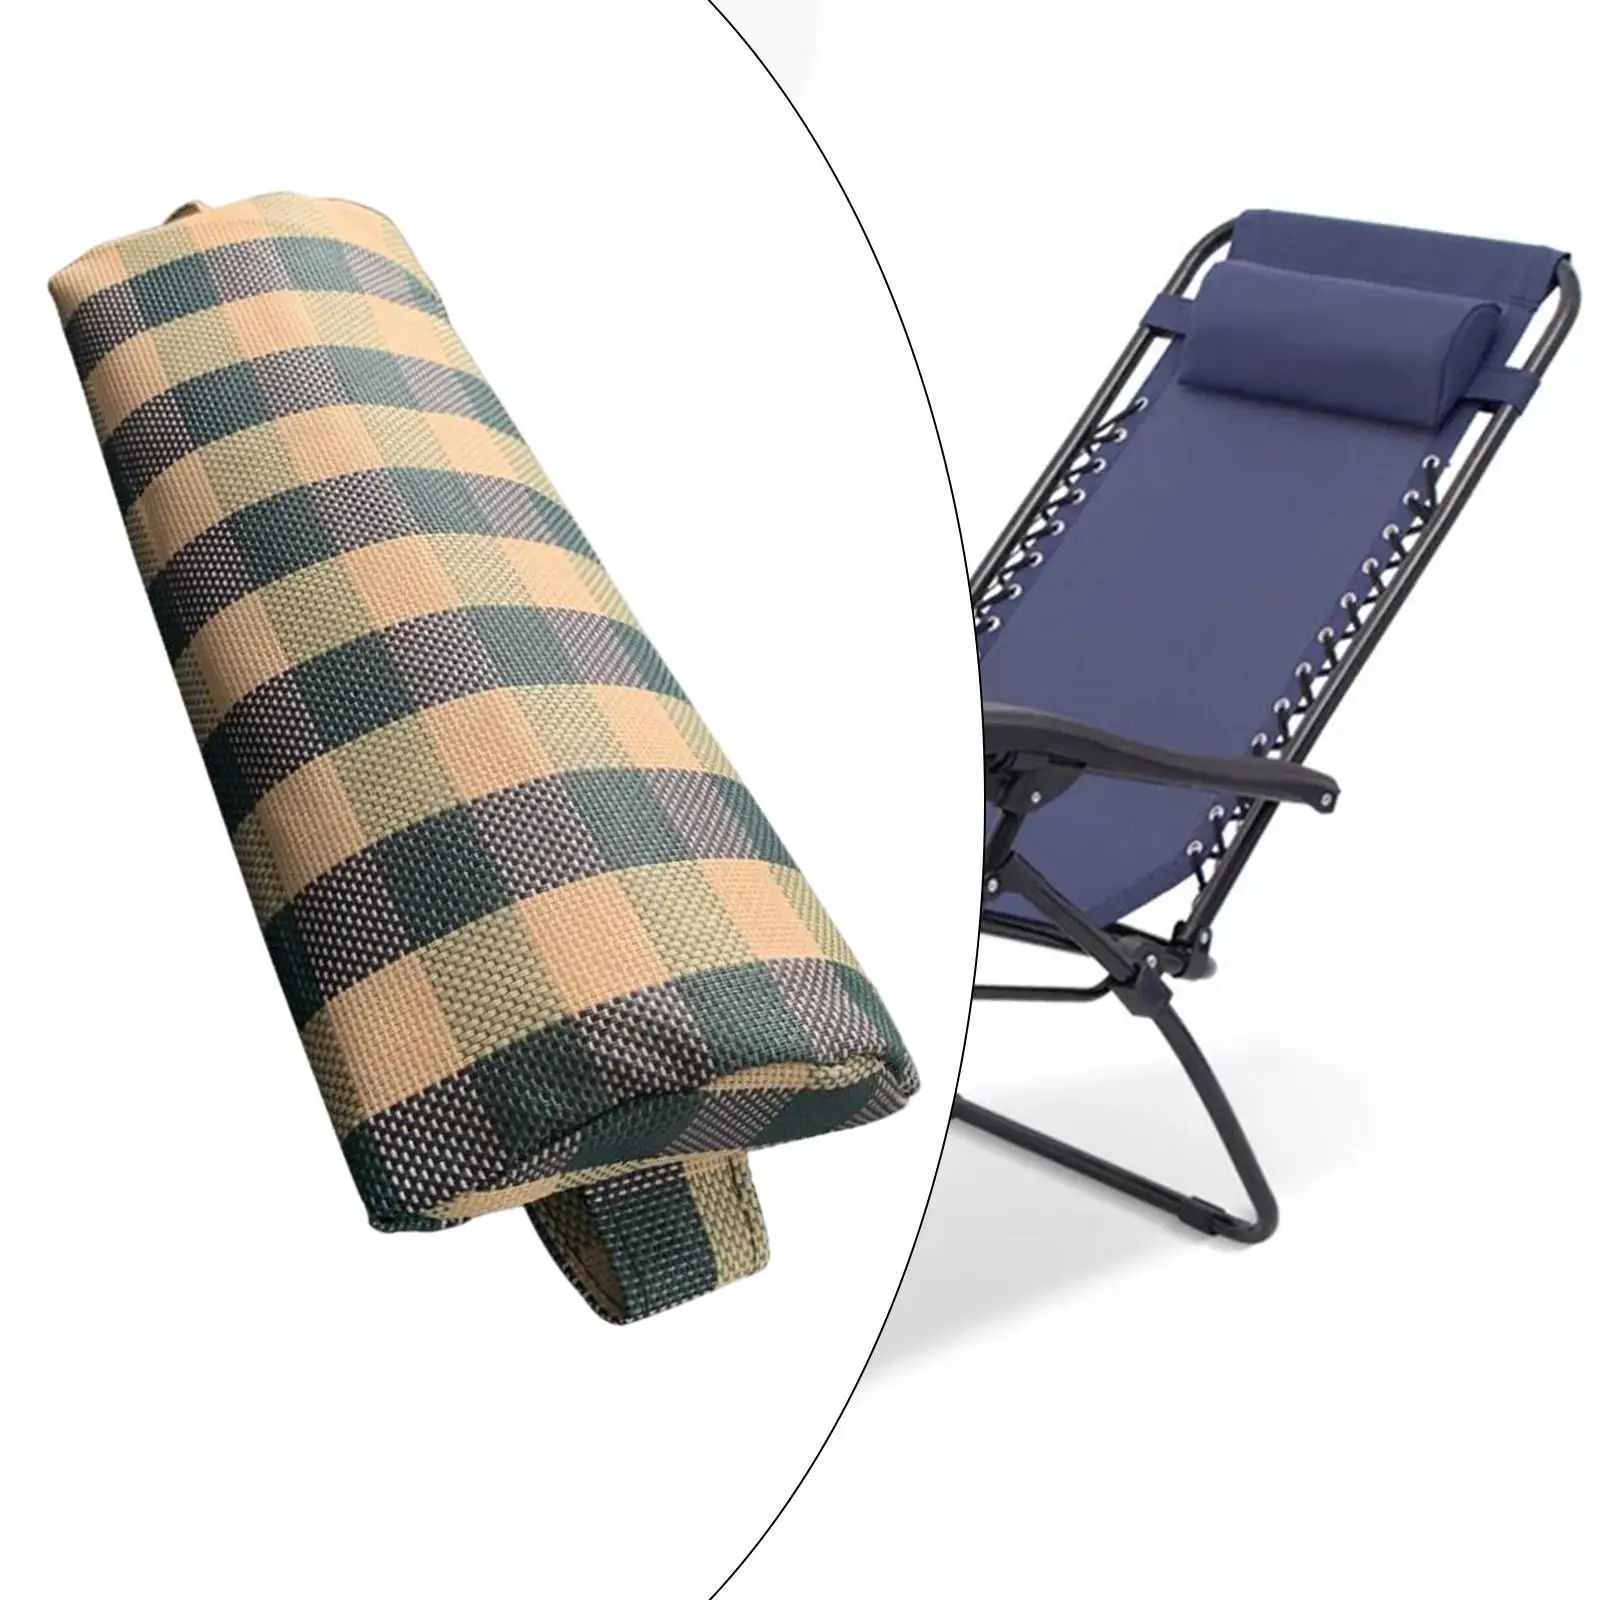 Head Cushion Pillow Removable Adjustable for Folding Chair Picnics Headrest